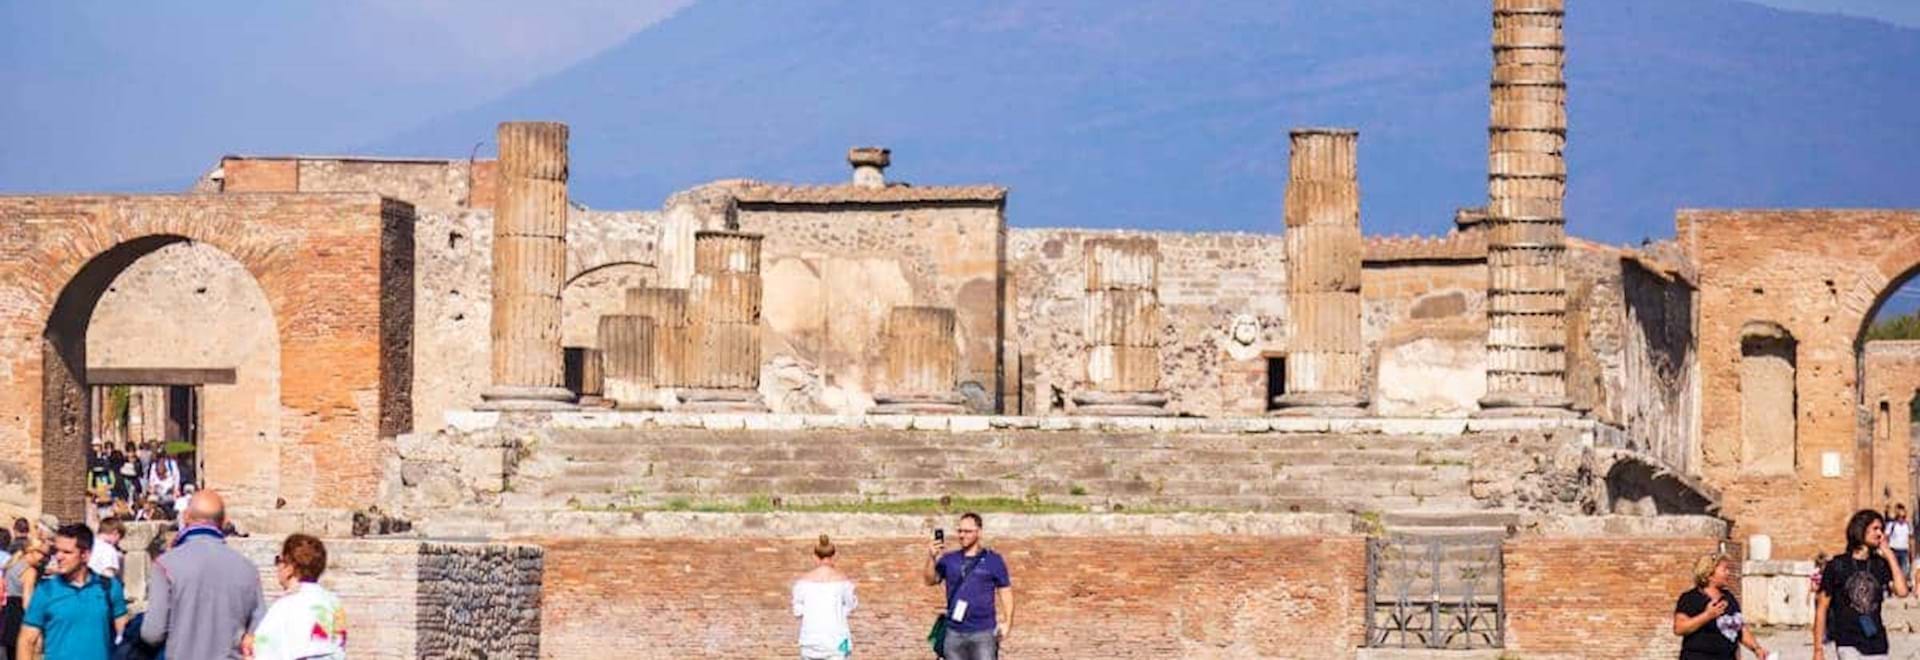 Tourists visiting Pompeii